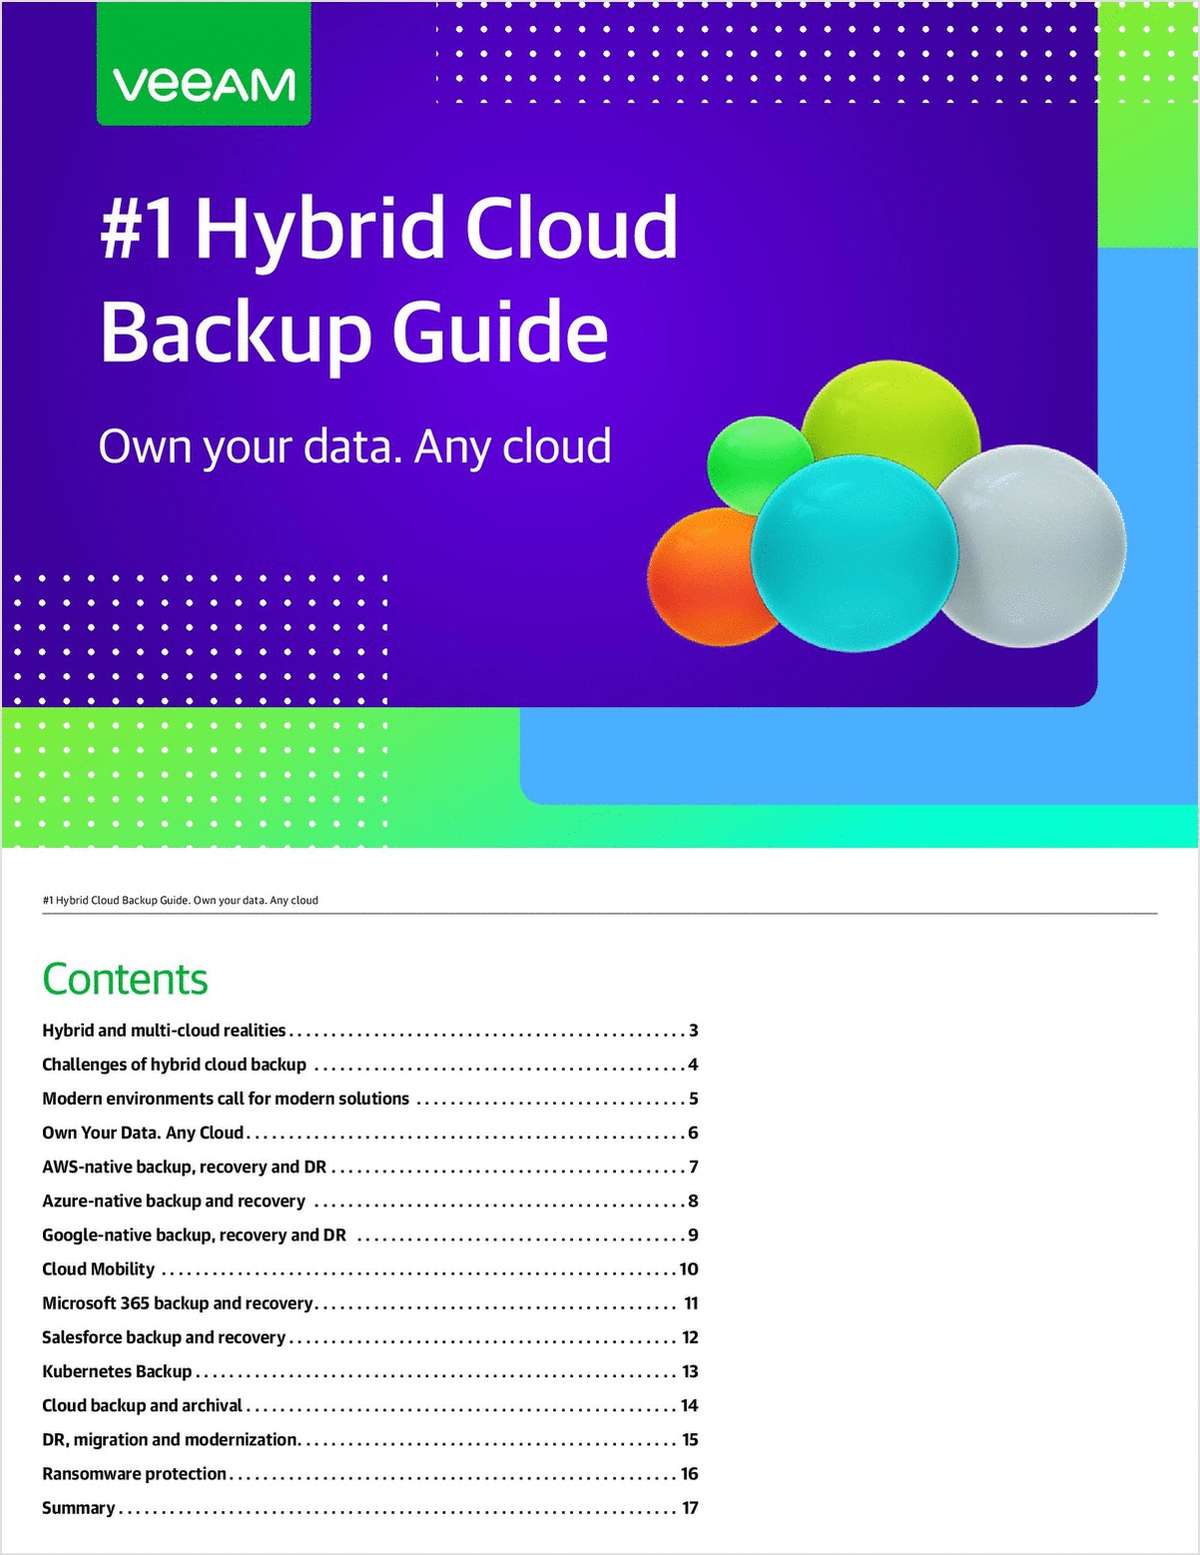 #1 Hybrid Cloud Backup Guide